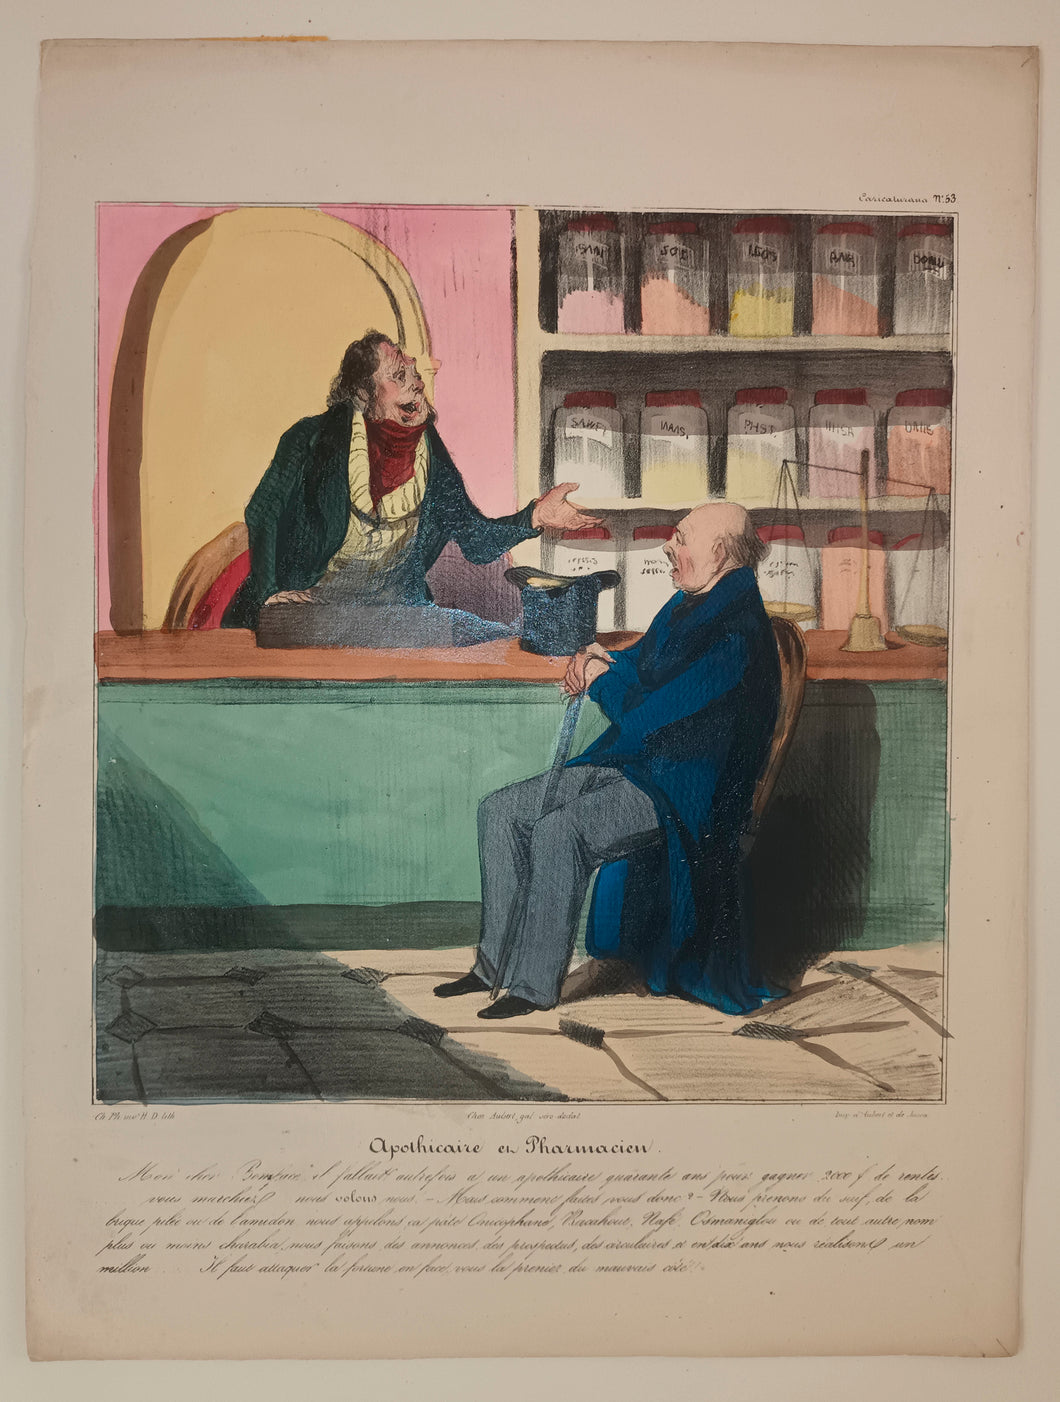 Apothicaire et Pharmacien.  1837.